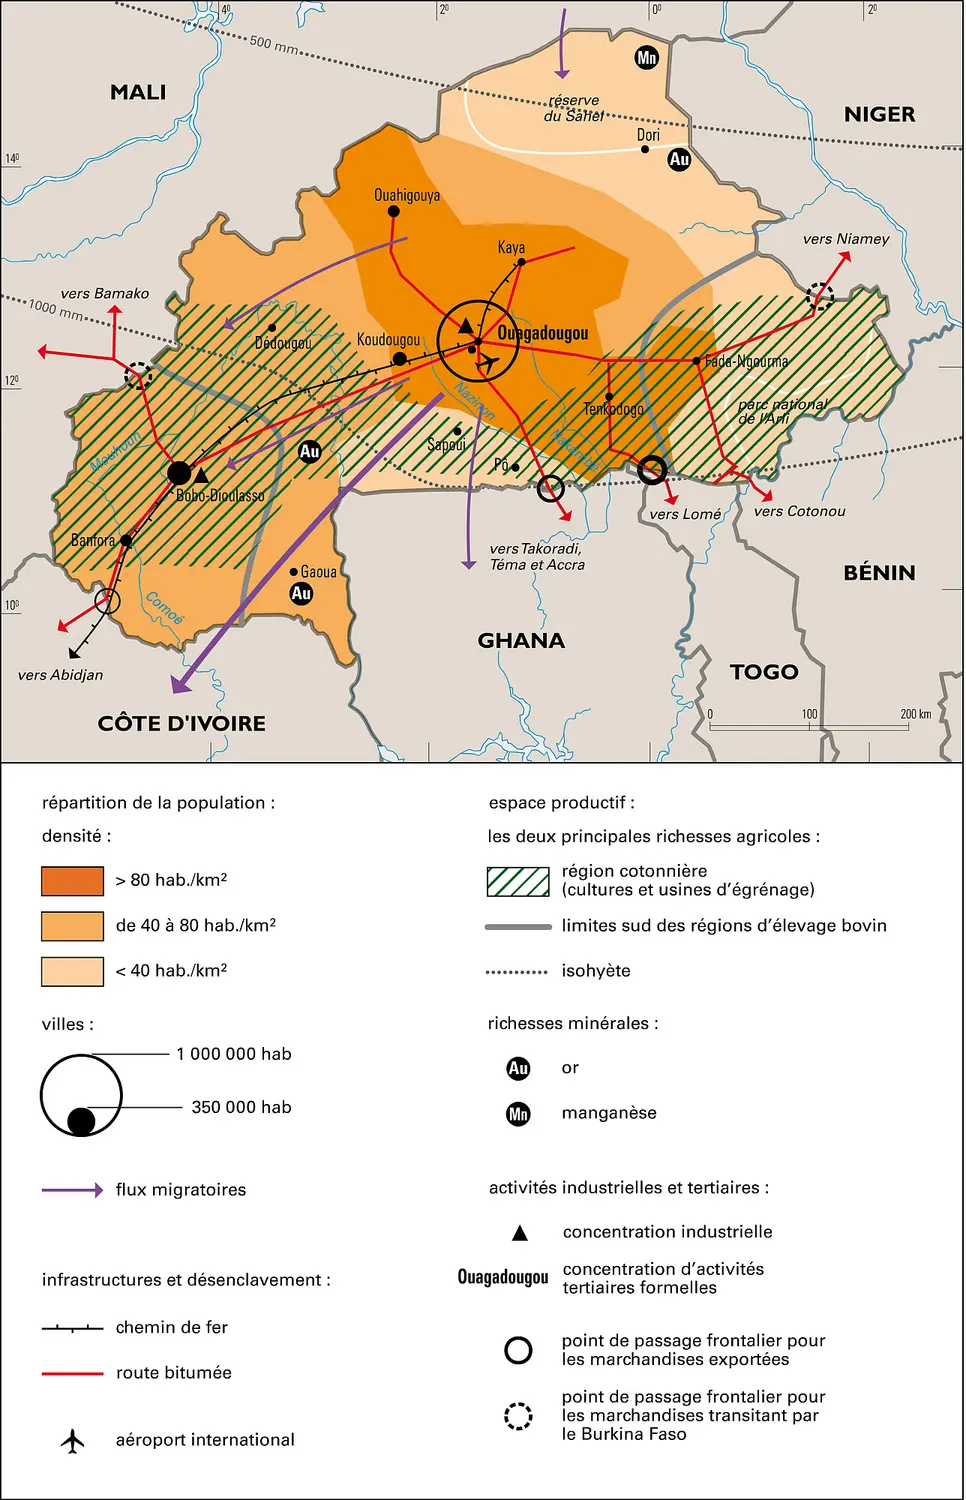 Burkina Faso : population et activités